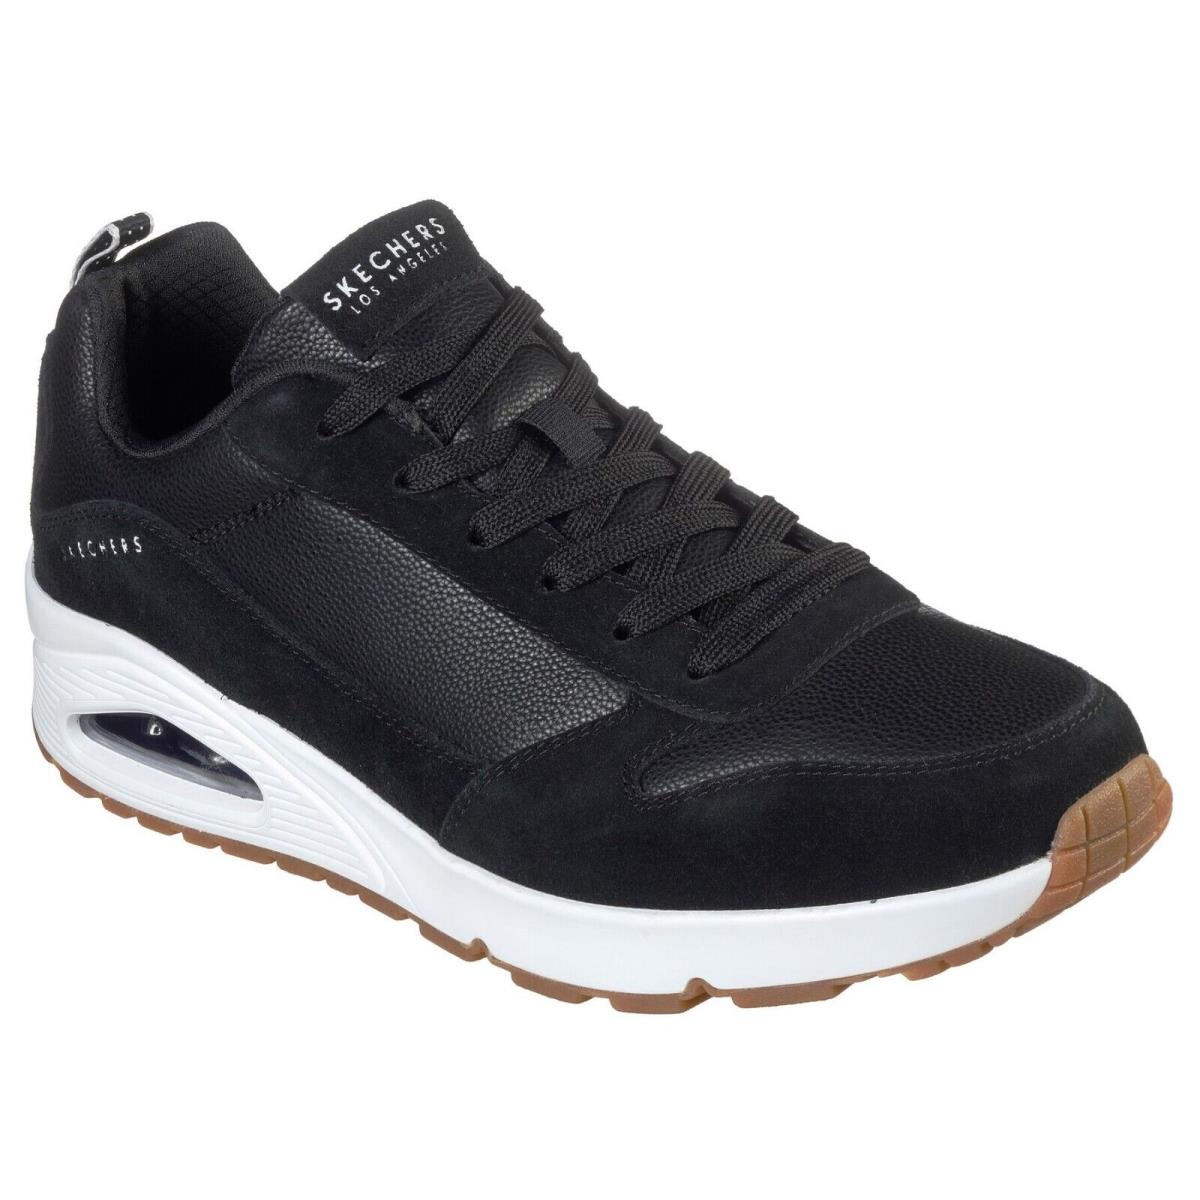 Men`s Skechers Street Uno Stacre Casual Shoes 52468 /bkw Multi Sizes Black/whit - Black/White